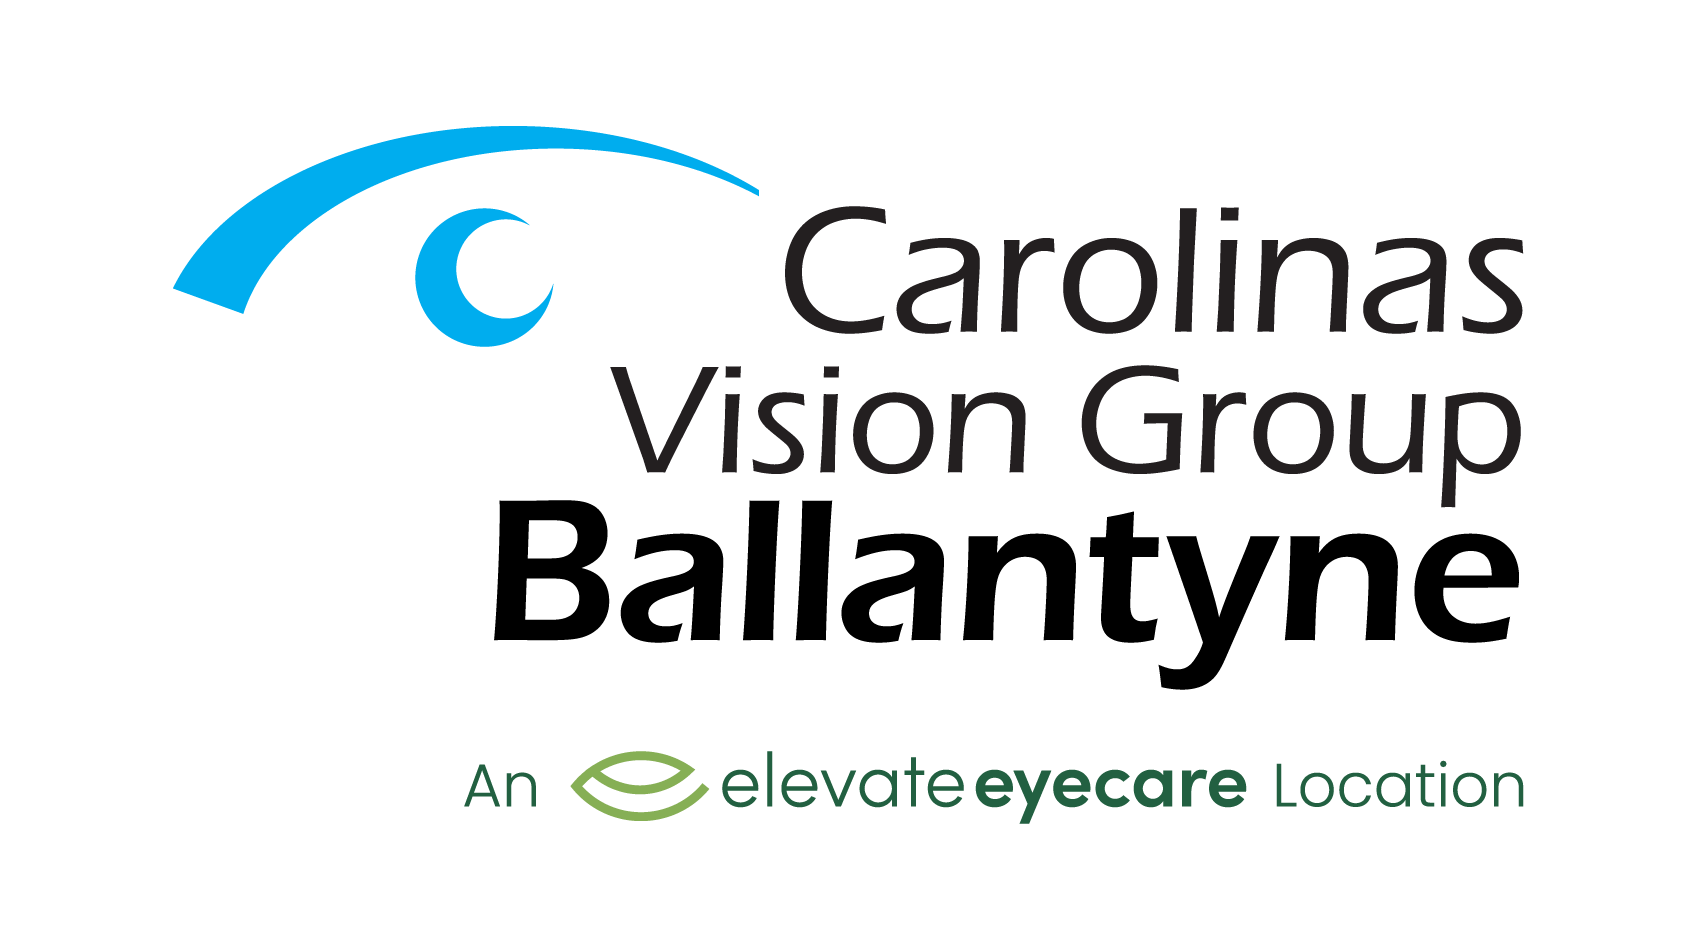 Carolinas Vision Group Ballantyne